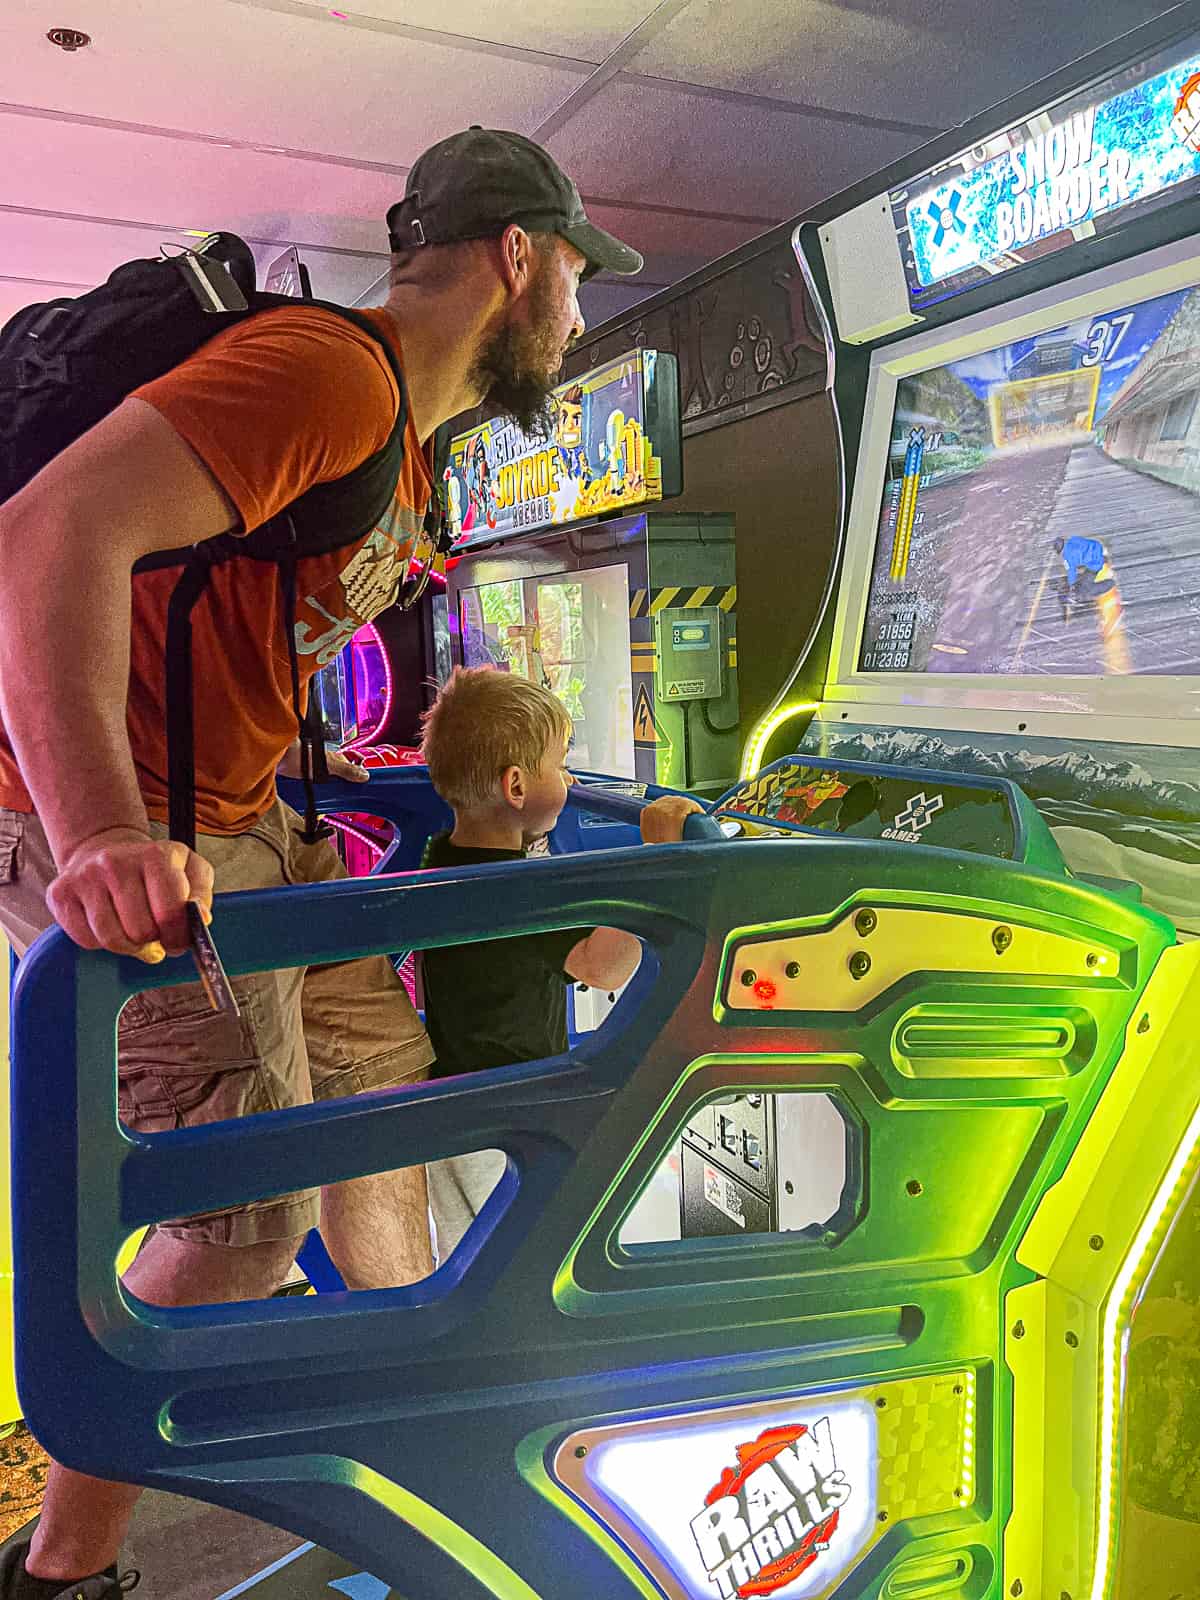 Disney World Travel Blogger Playing at Pumbaa's Fun and Games Arcade at Animal Kingdom Lodge Resort in Disney World